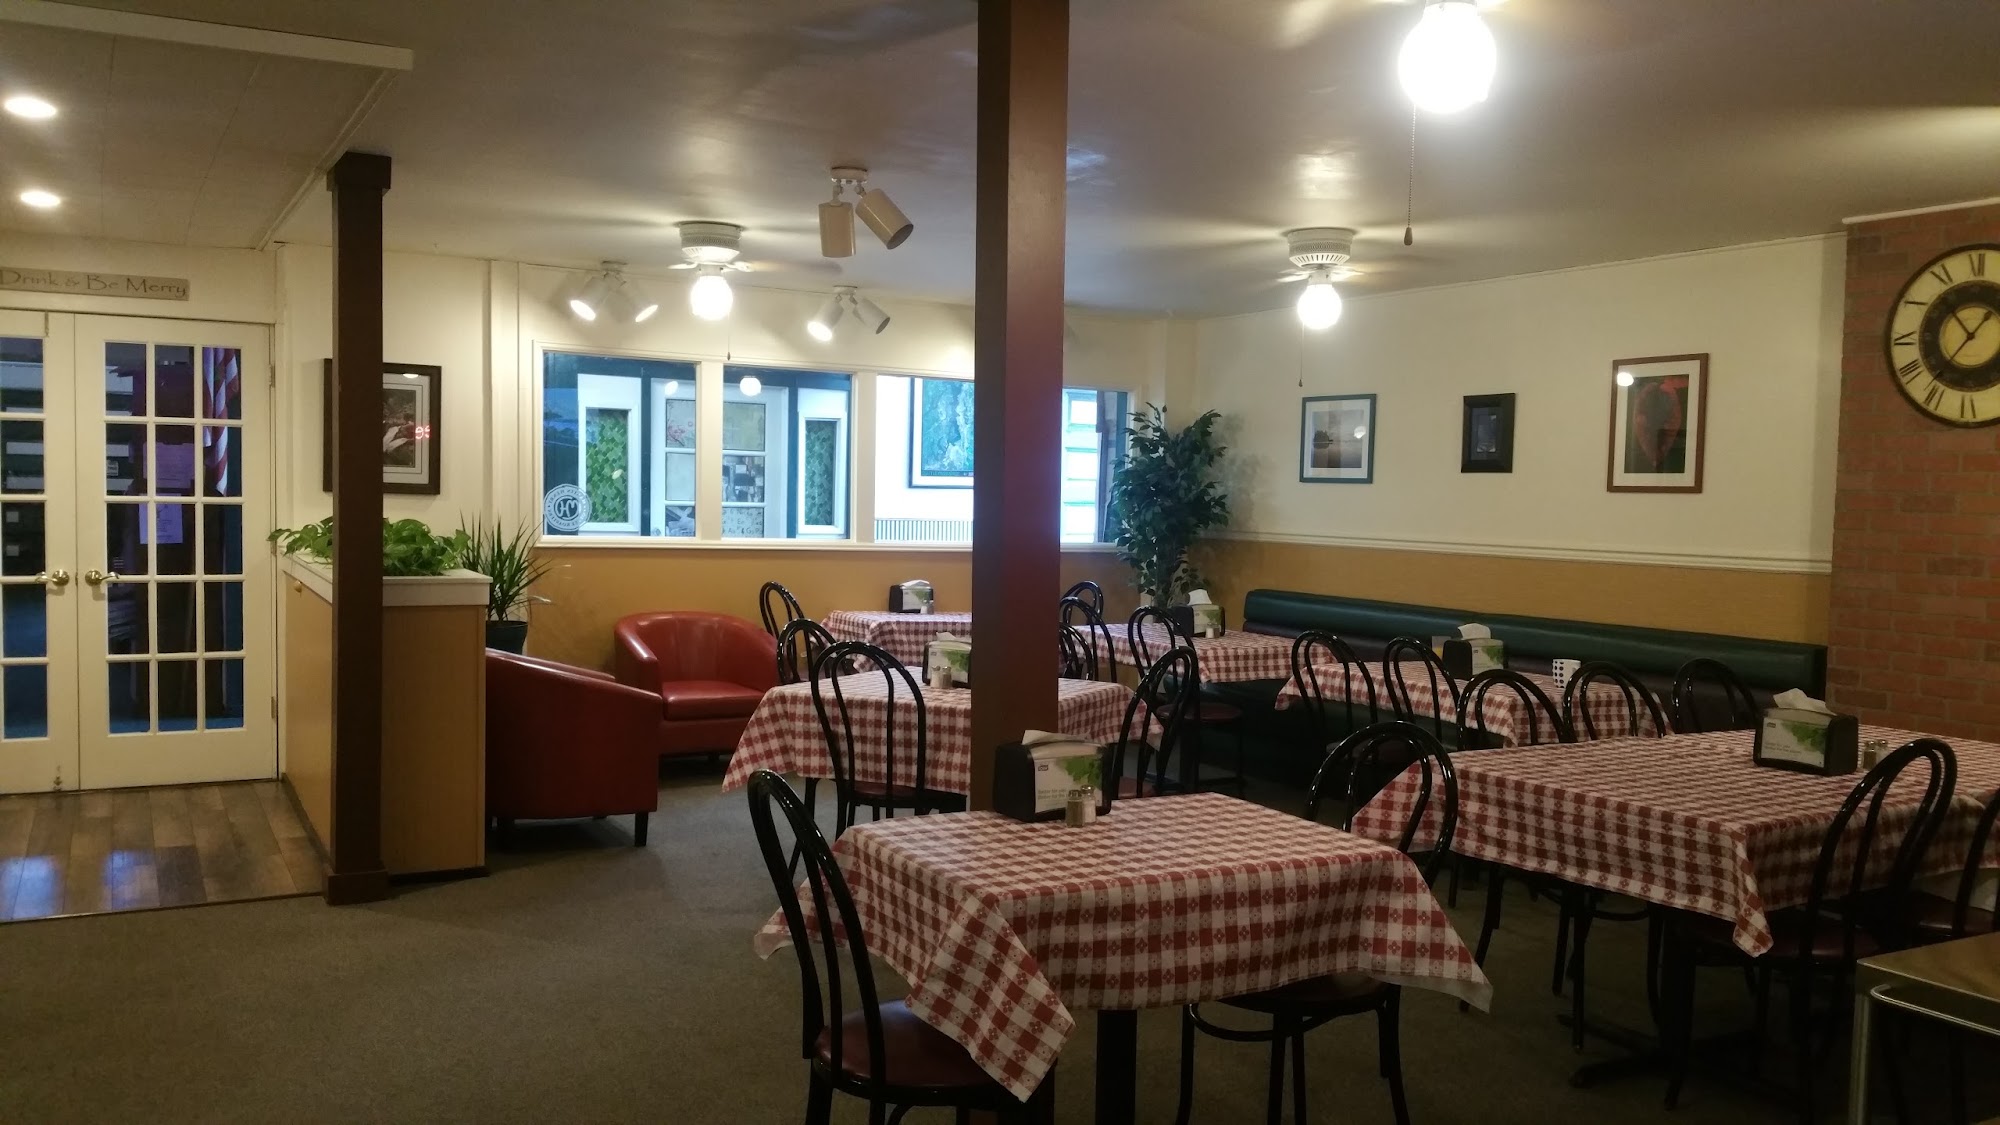 The Sumner Café & Catering